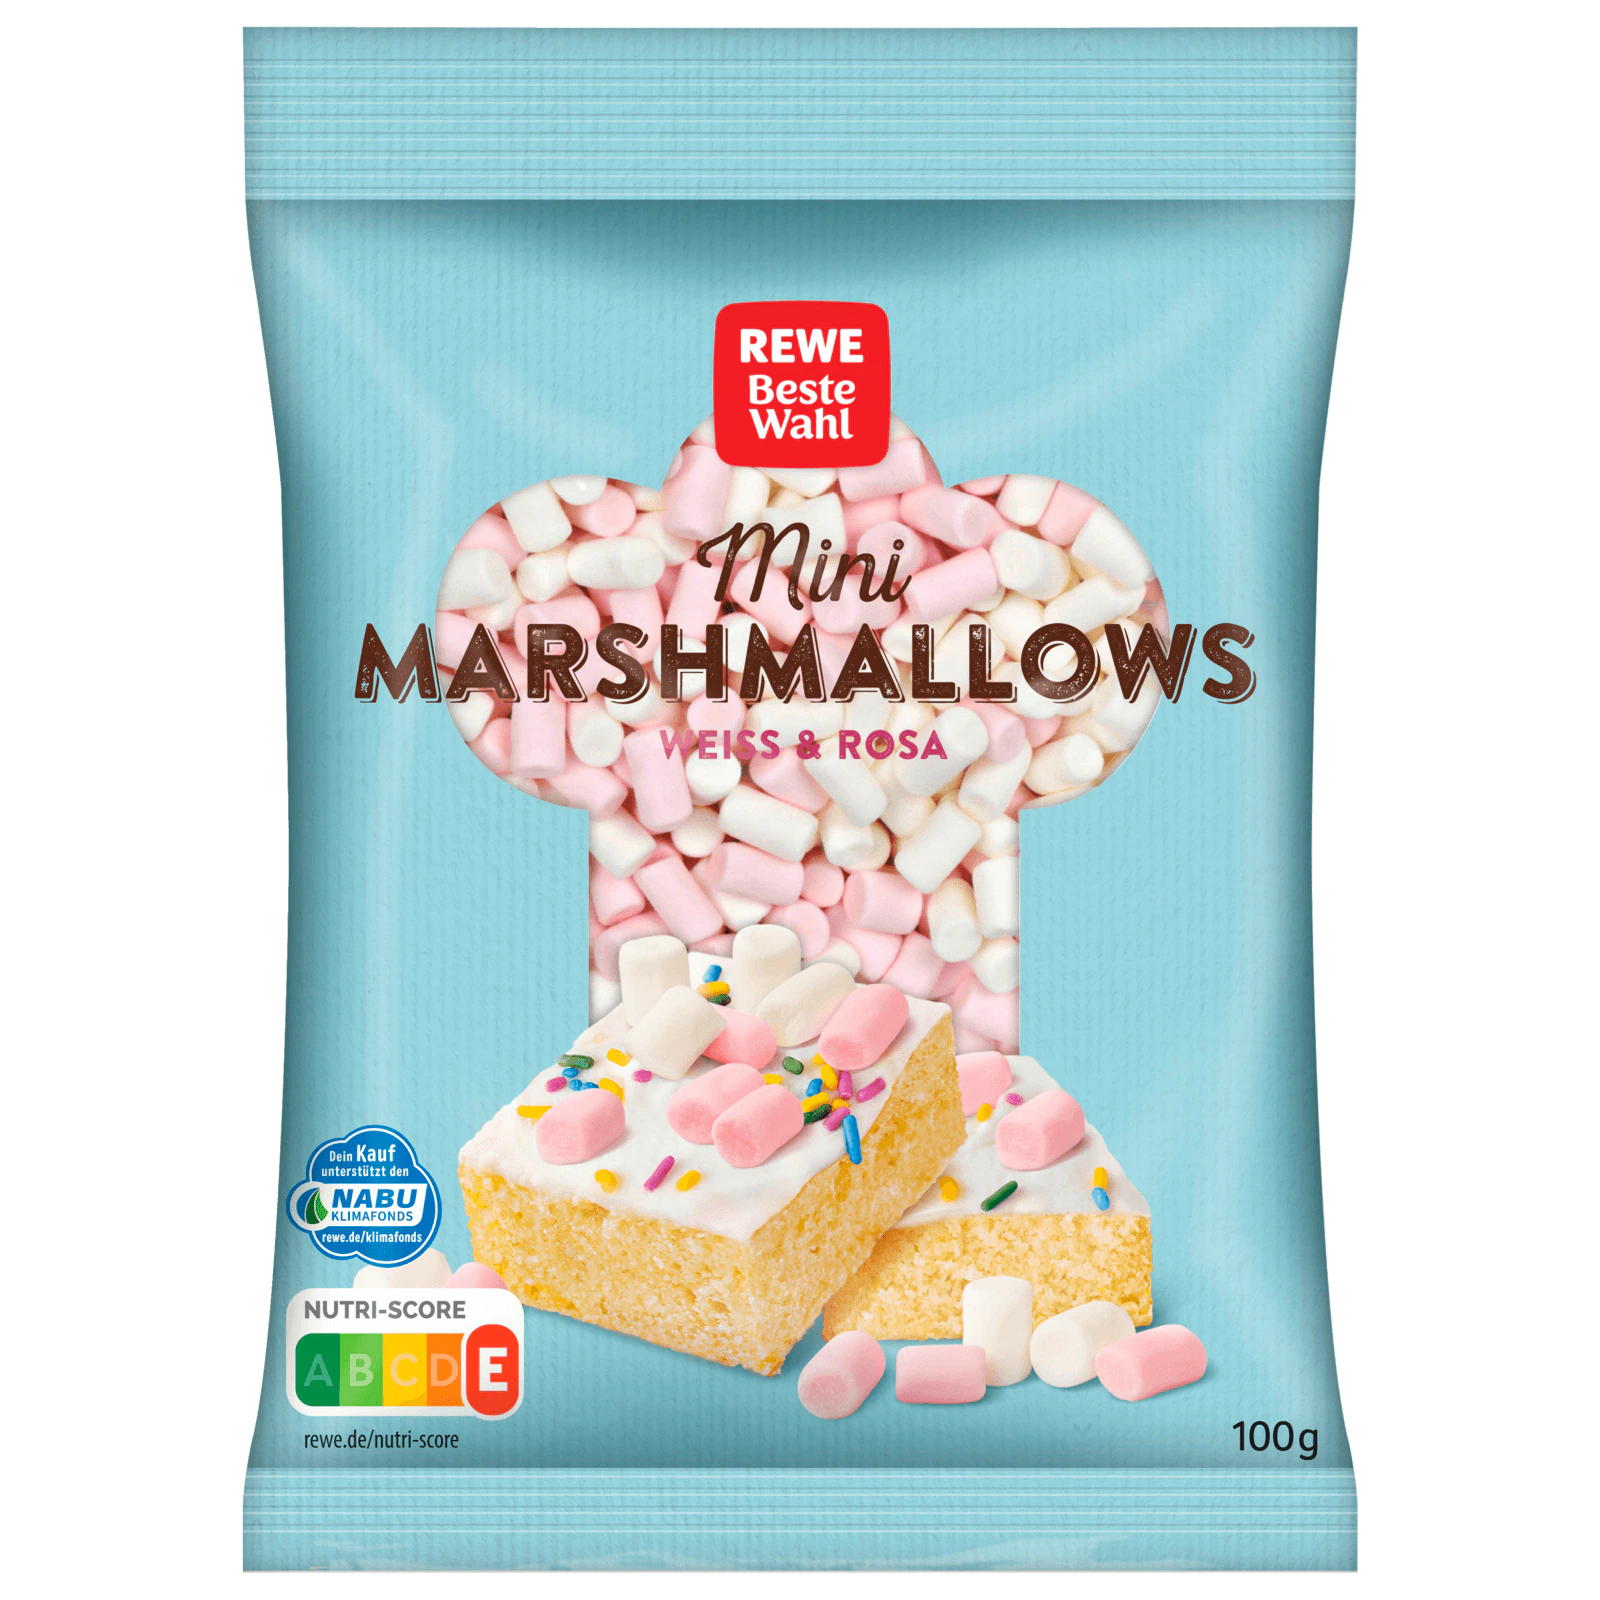 REWE Beste Wahl Mini Marshmallows Weiss & Rosa 100g